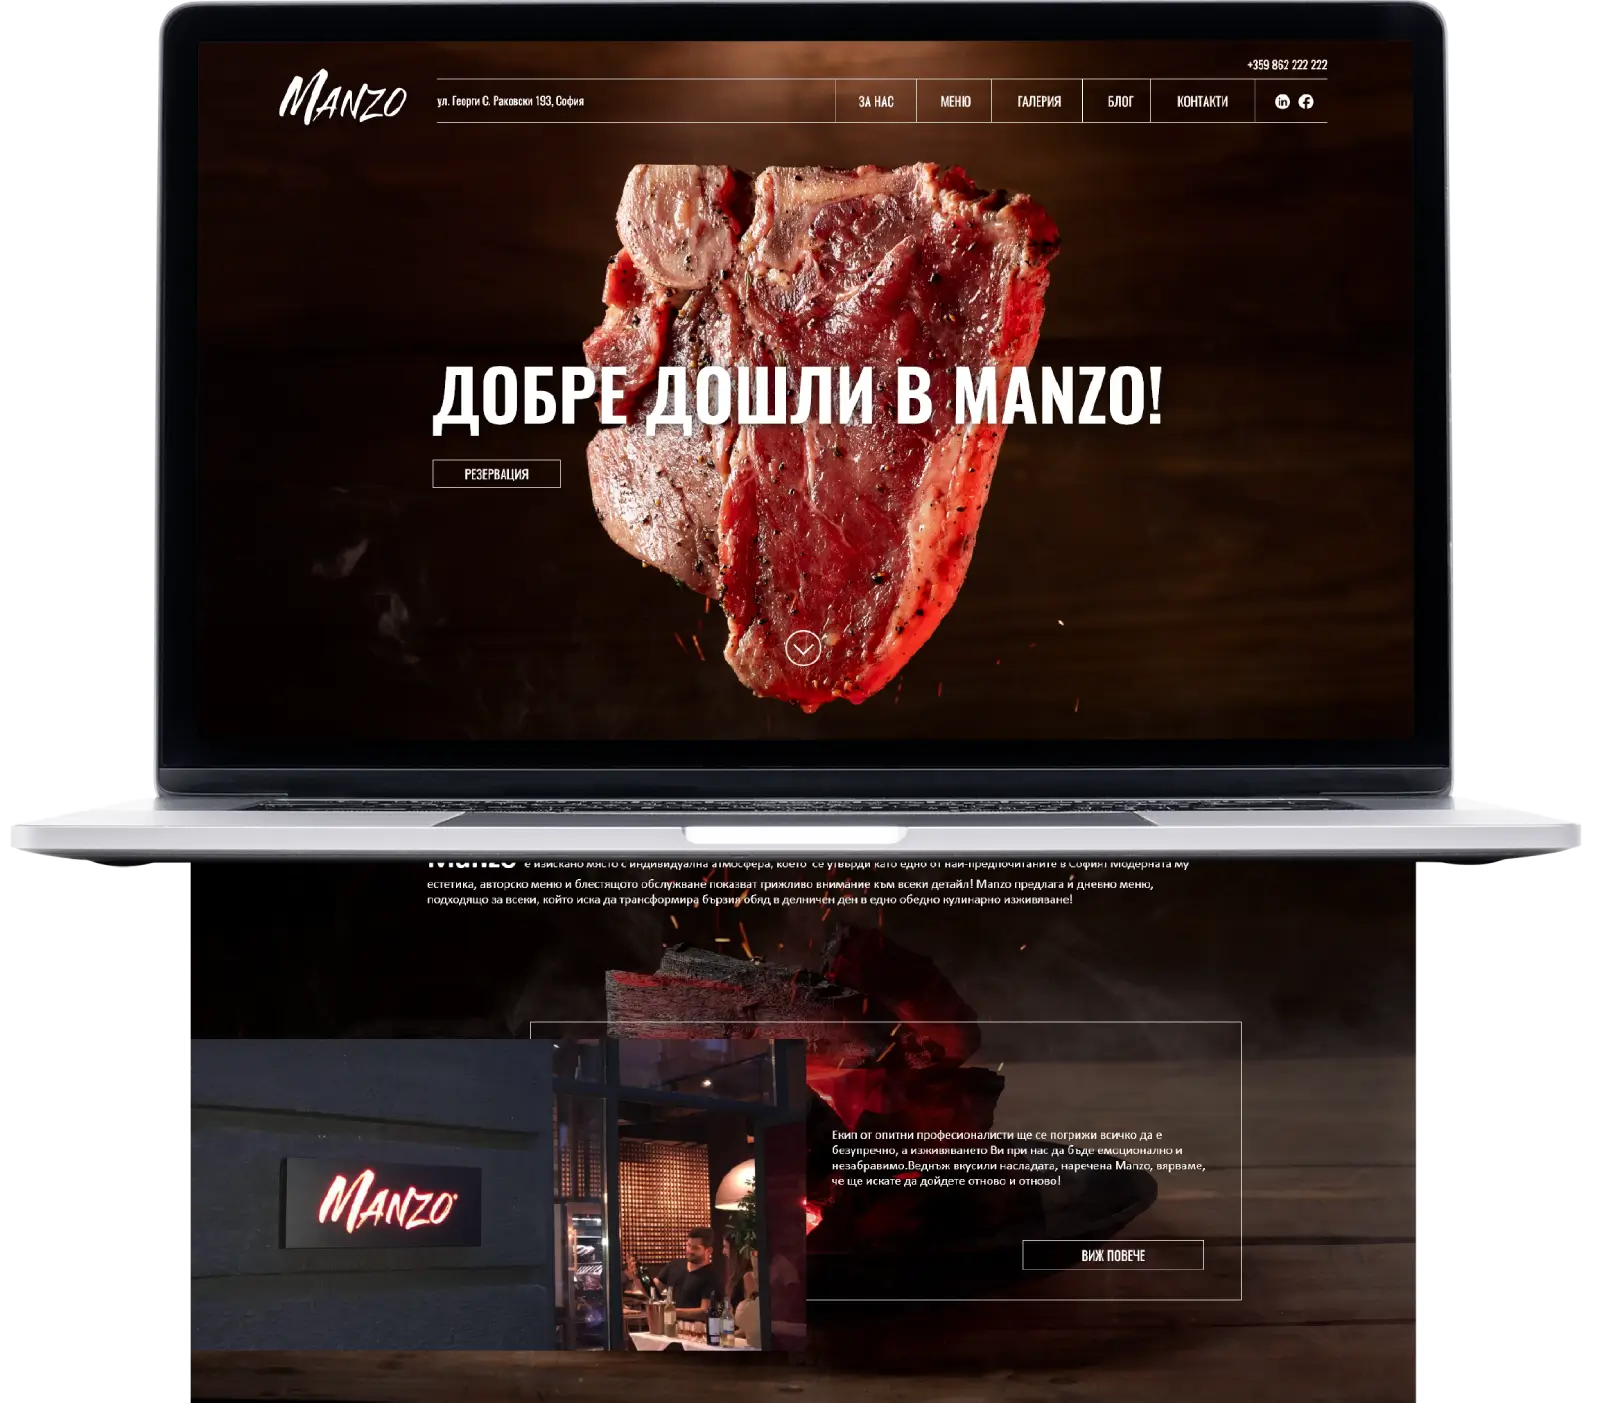 Manzo website laptop mockup